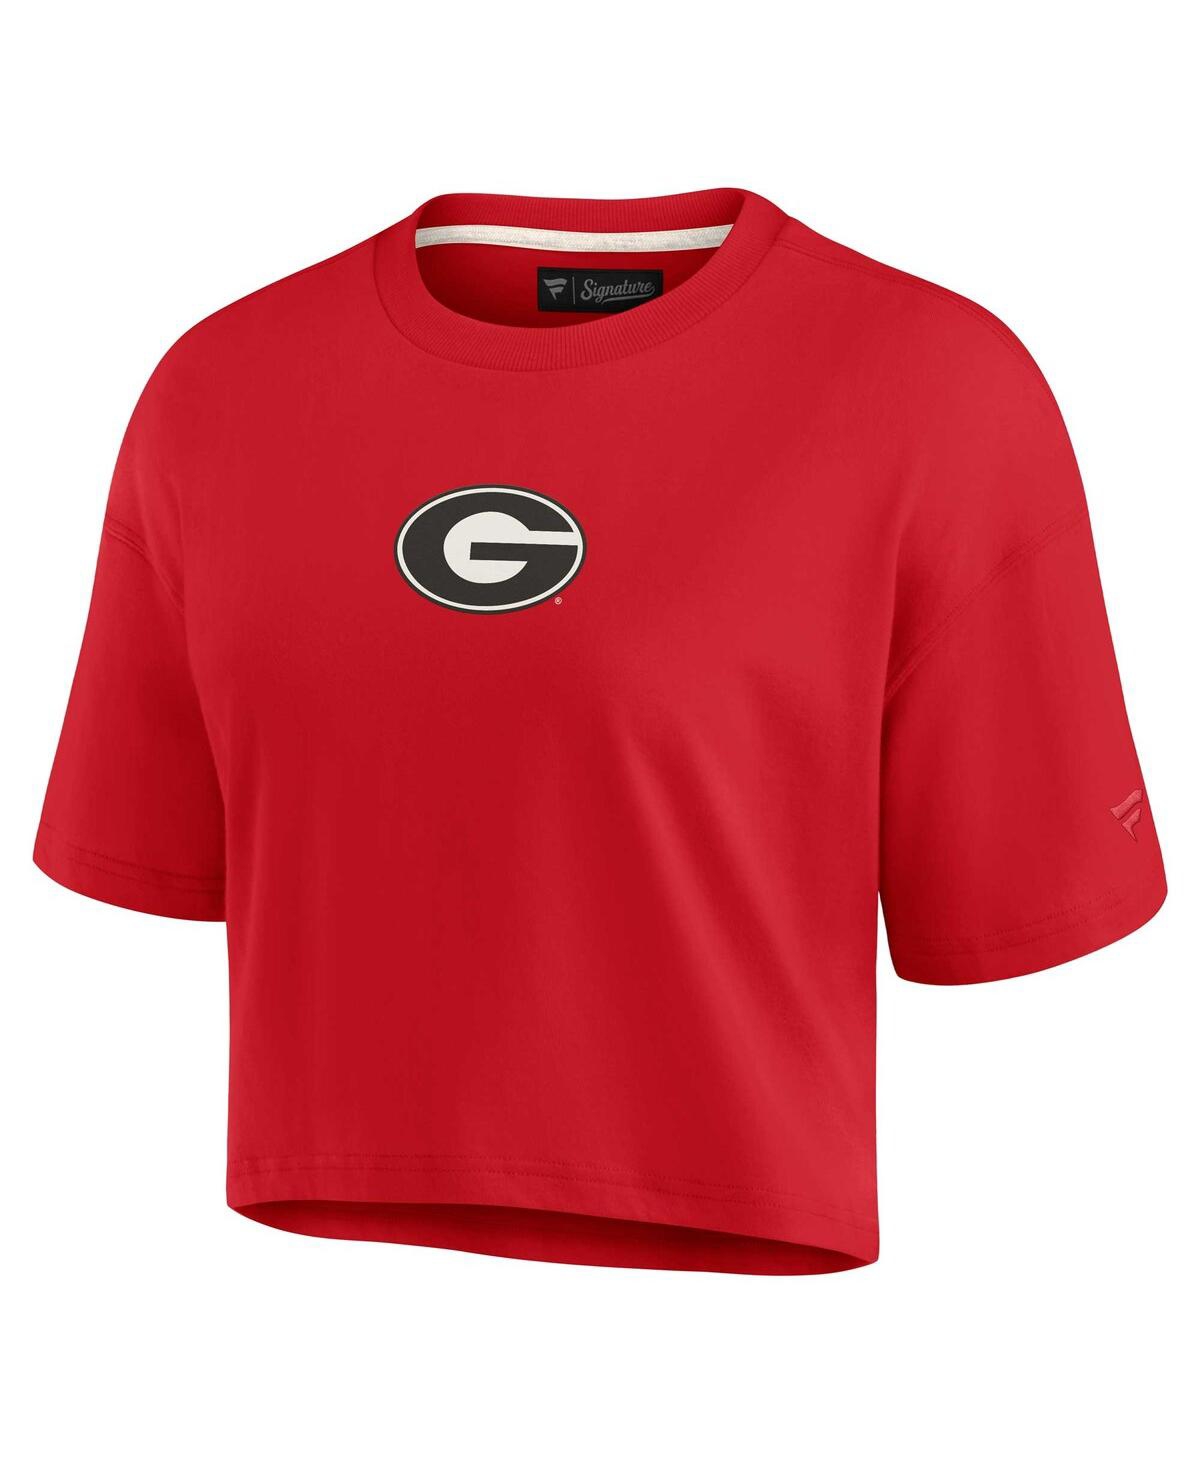 Shop Fanatics Signature Women's  Red Georgia Bulldogs Super Soft Boxy Cropped T-shirt